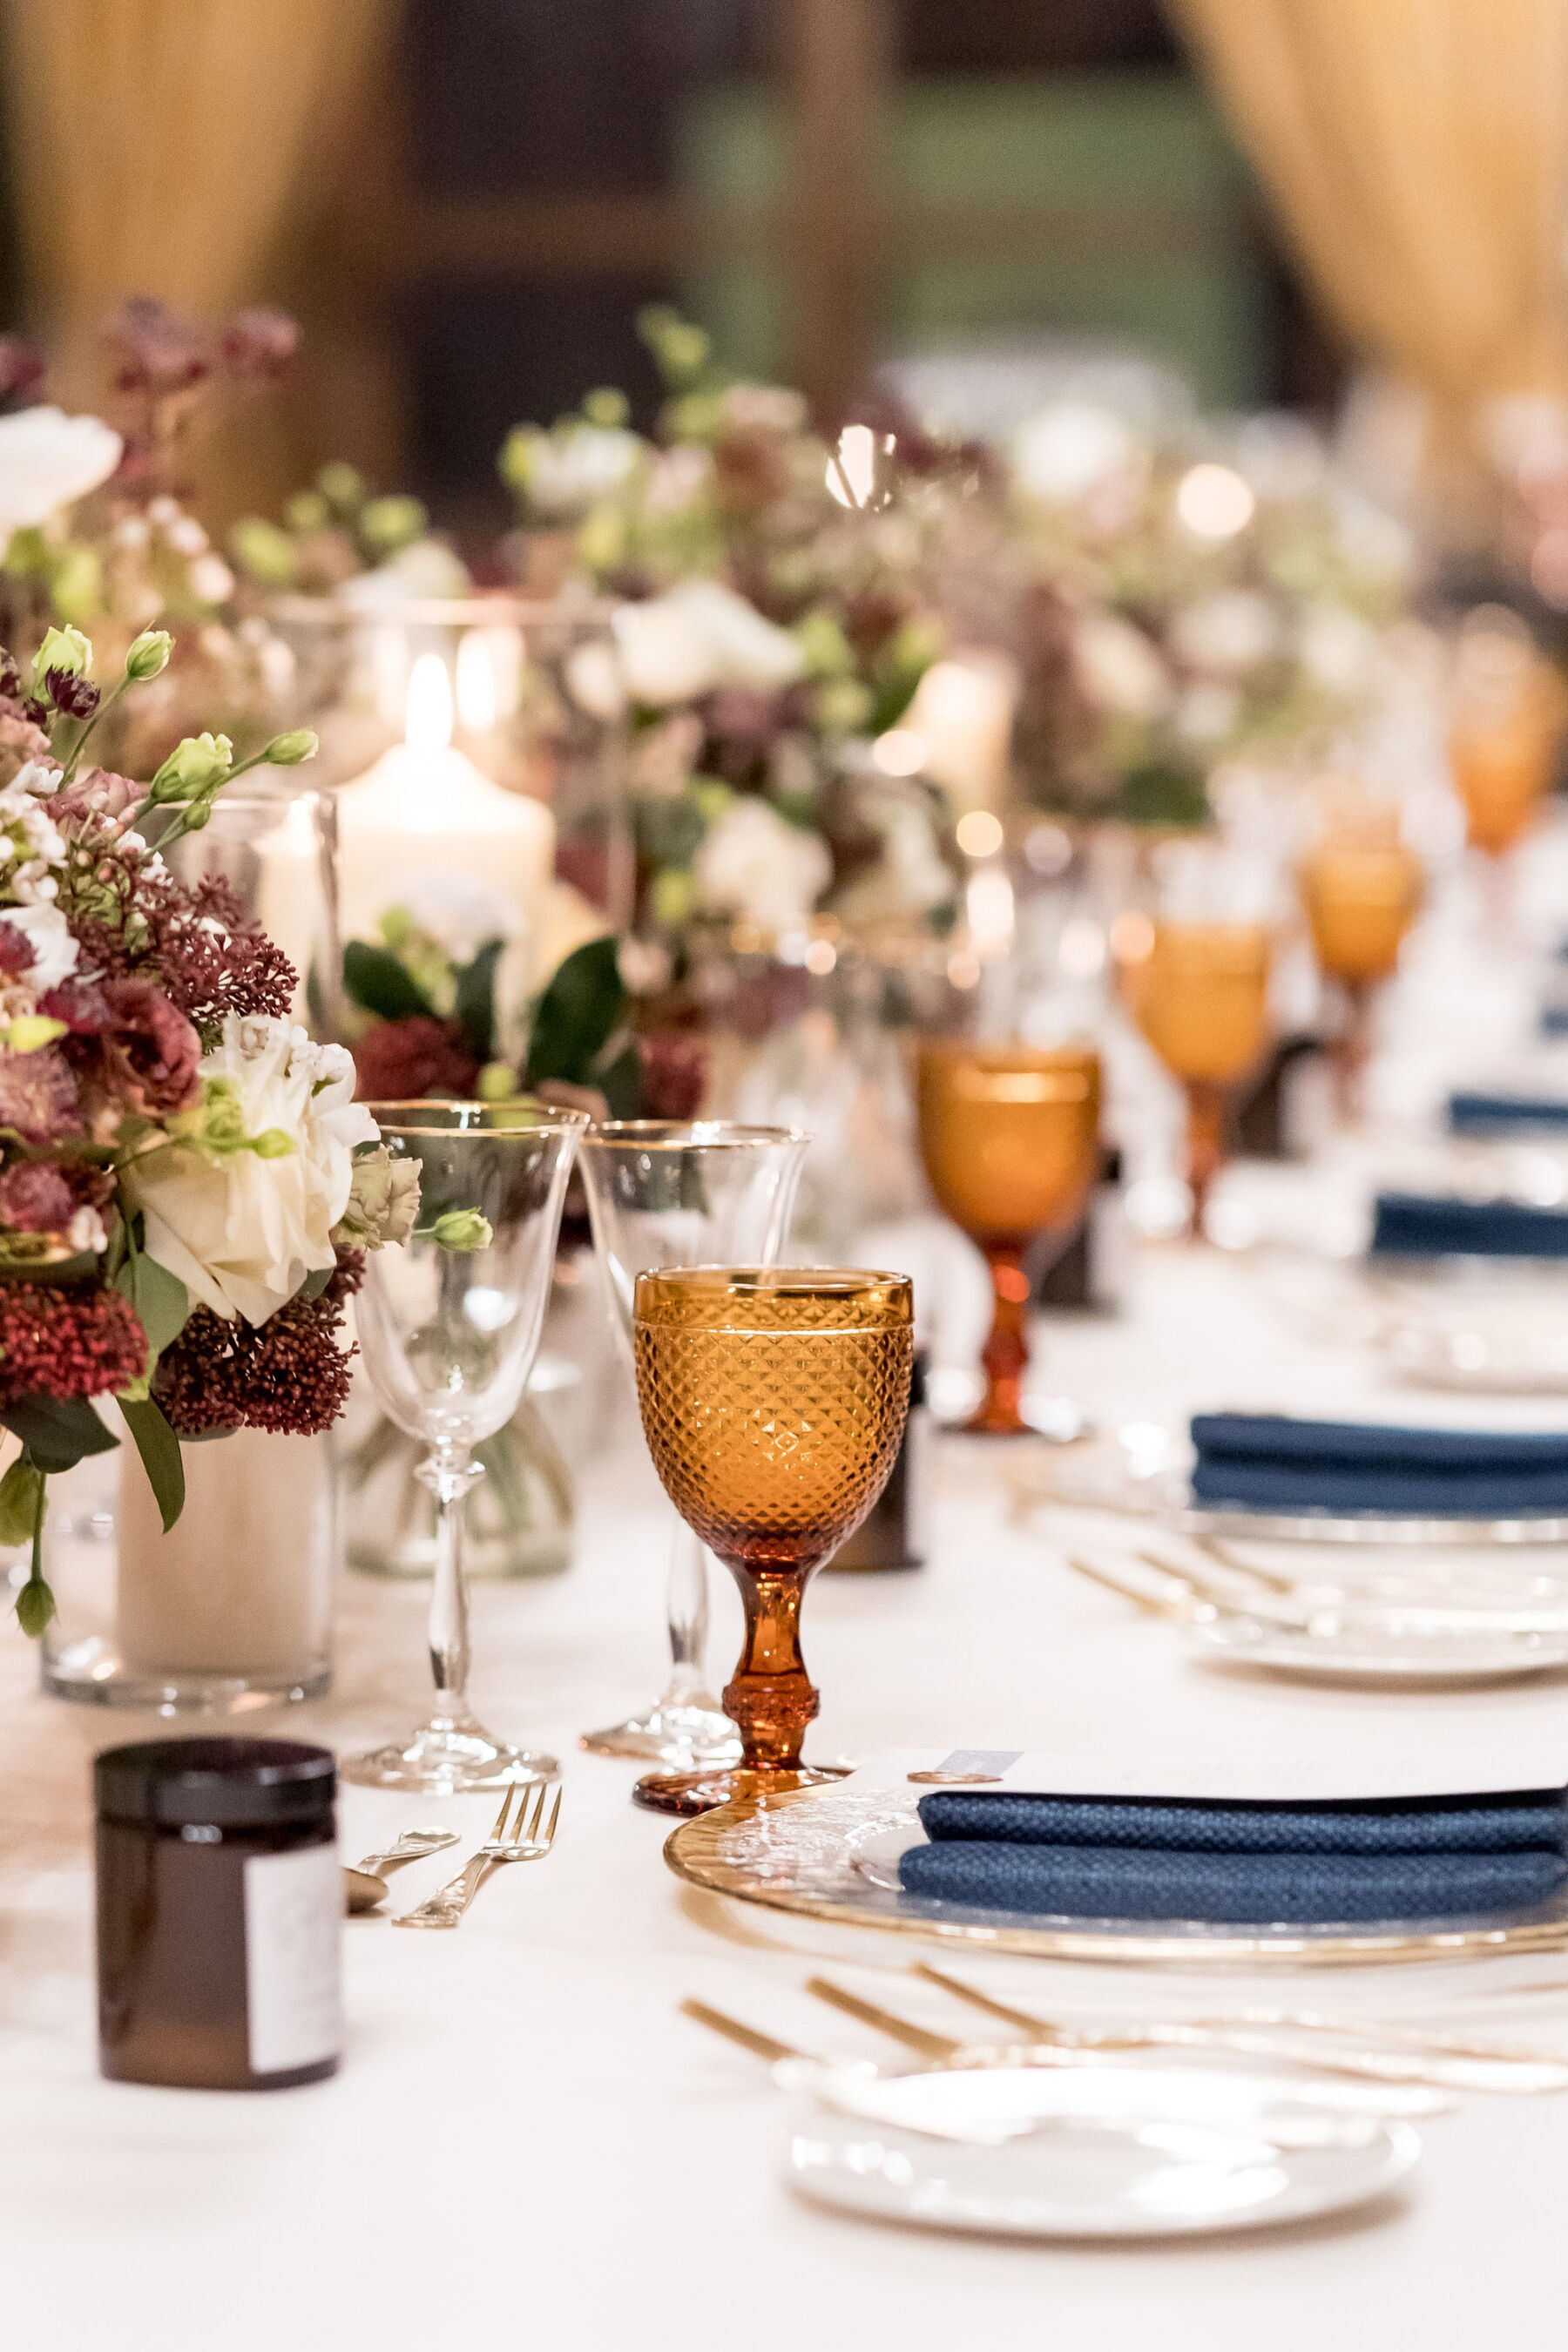 Glamorous Amber wine glasses, winter wedding table decor.